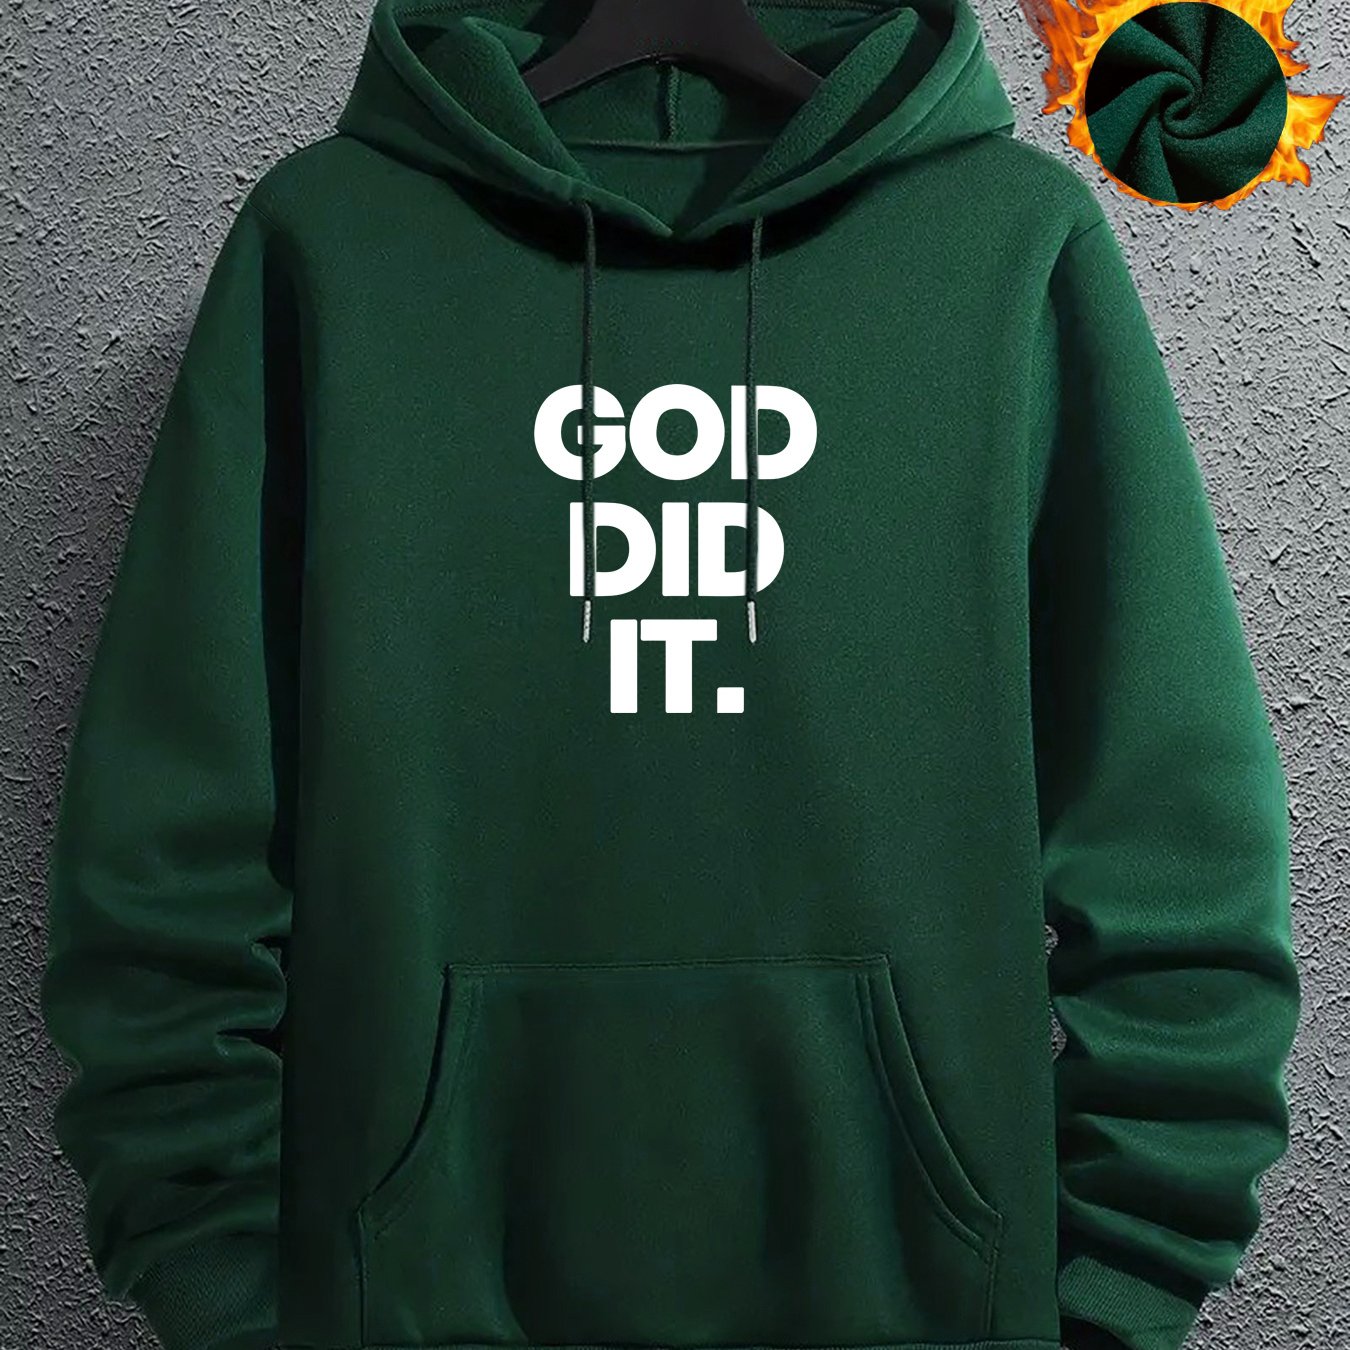 GOD DID IT Men's Christian Pullover Hooded Sweatshirt claimedbygoddesigns